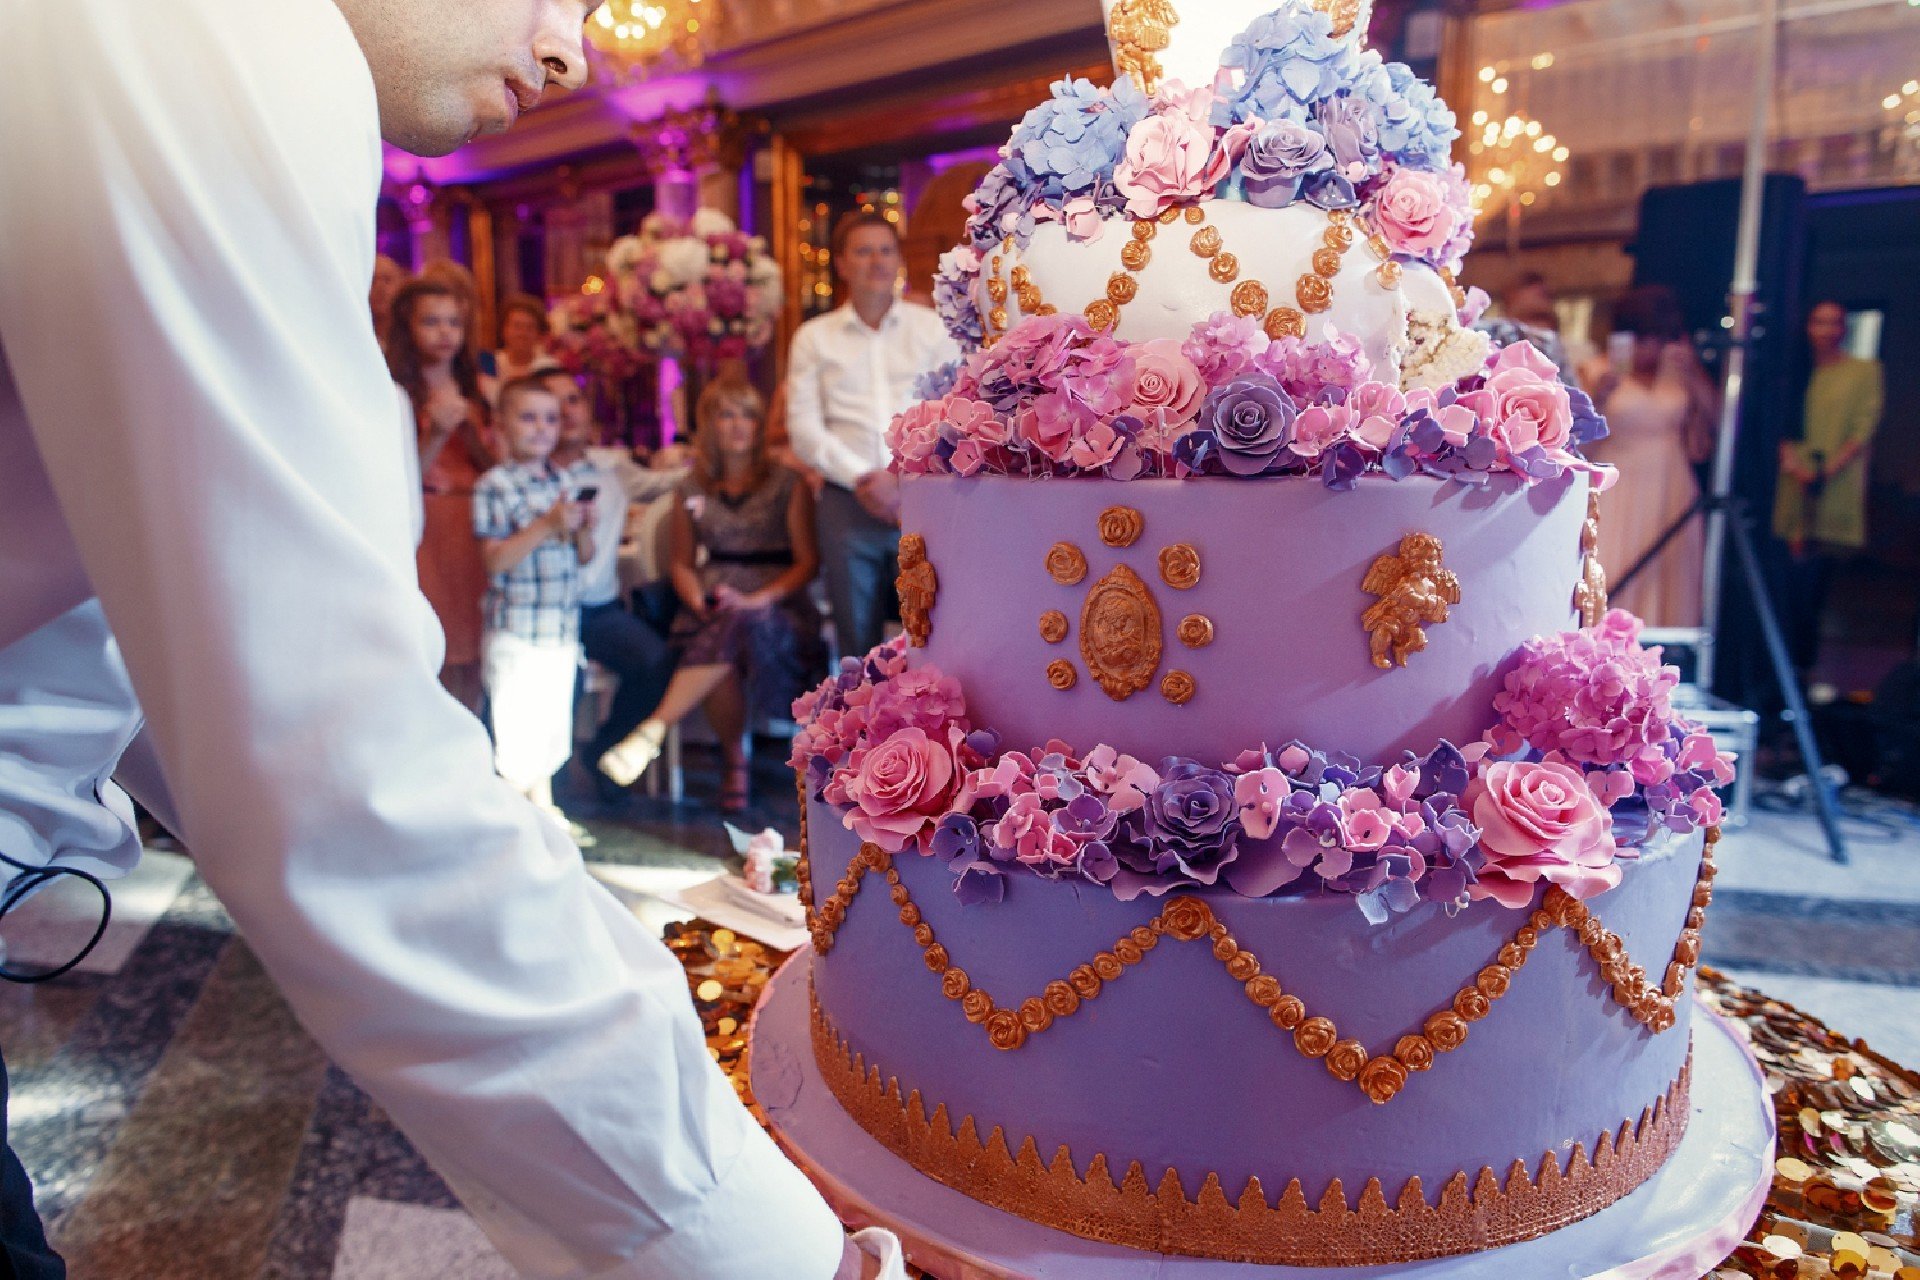 Comment transporter un Wedding Cake ?